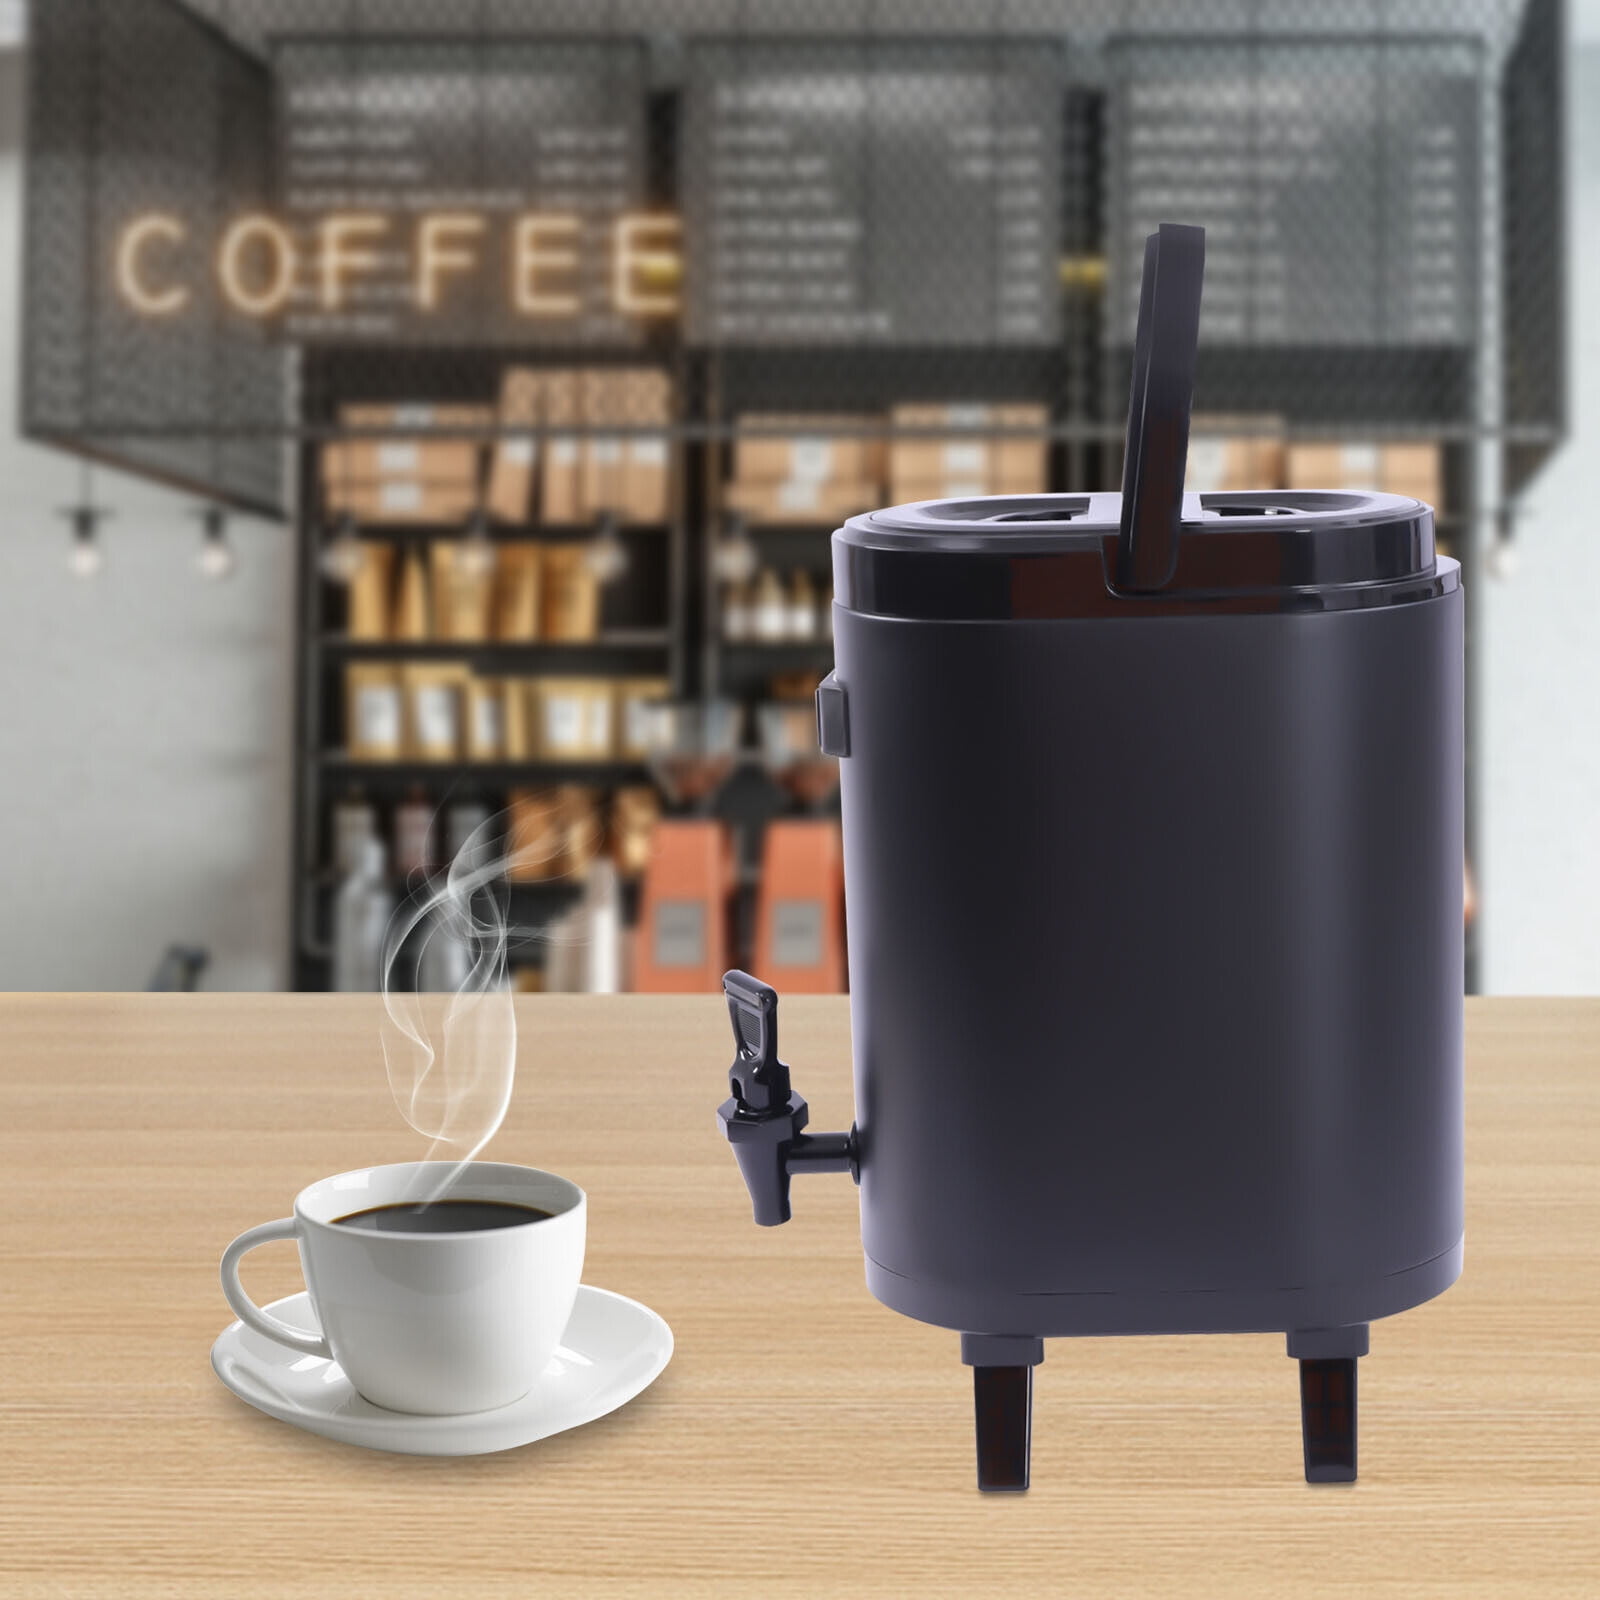 Beverage Dispensing System Hot Chocolate Dispenser, 6 L, black